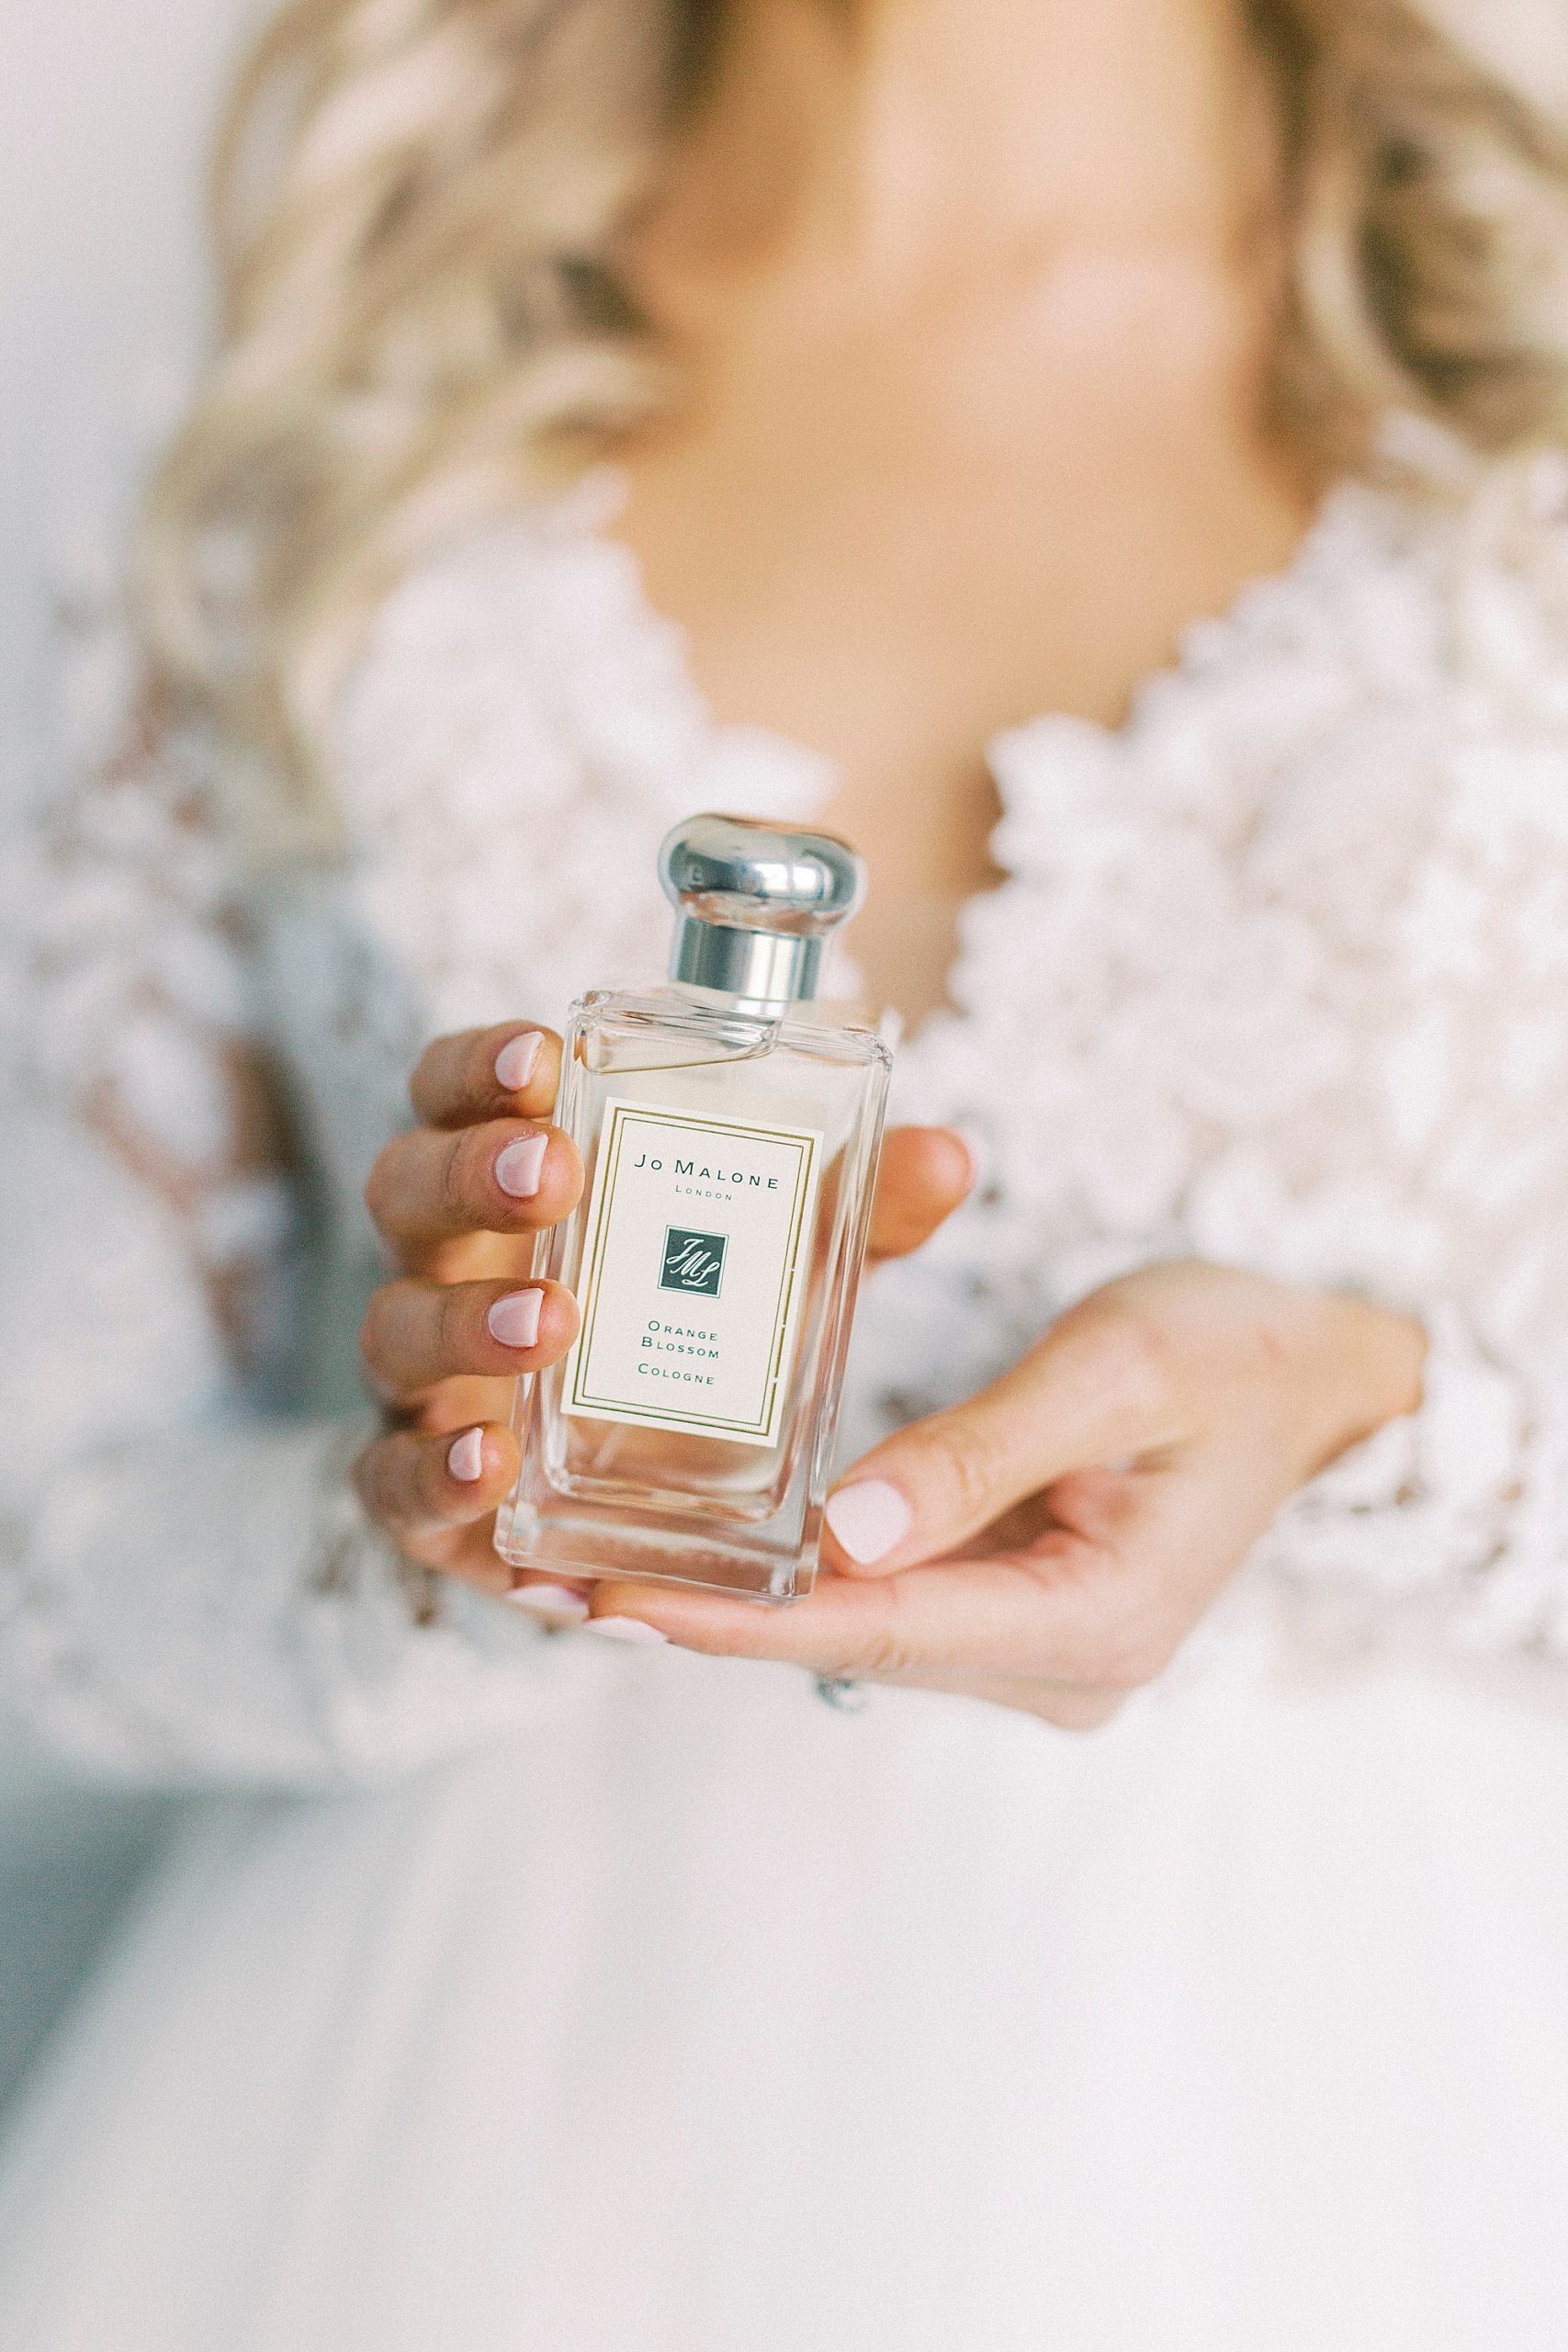 bride holds bottle of perfume wearing hayden olivia bridal gown